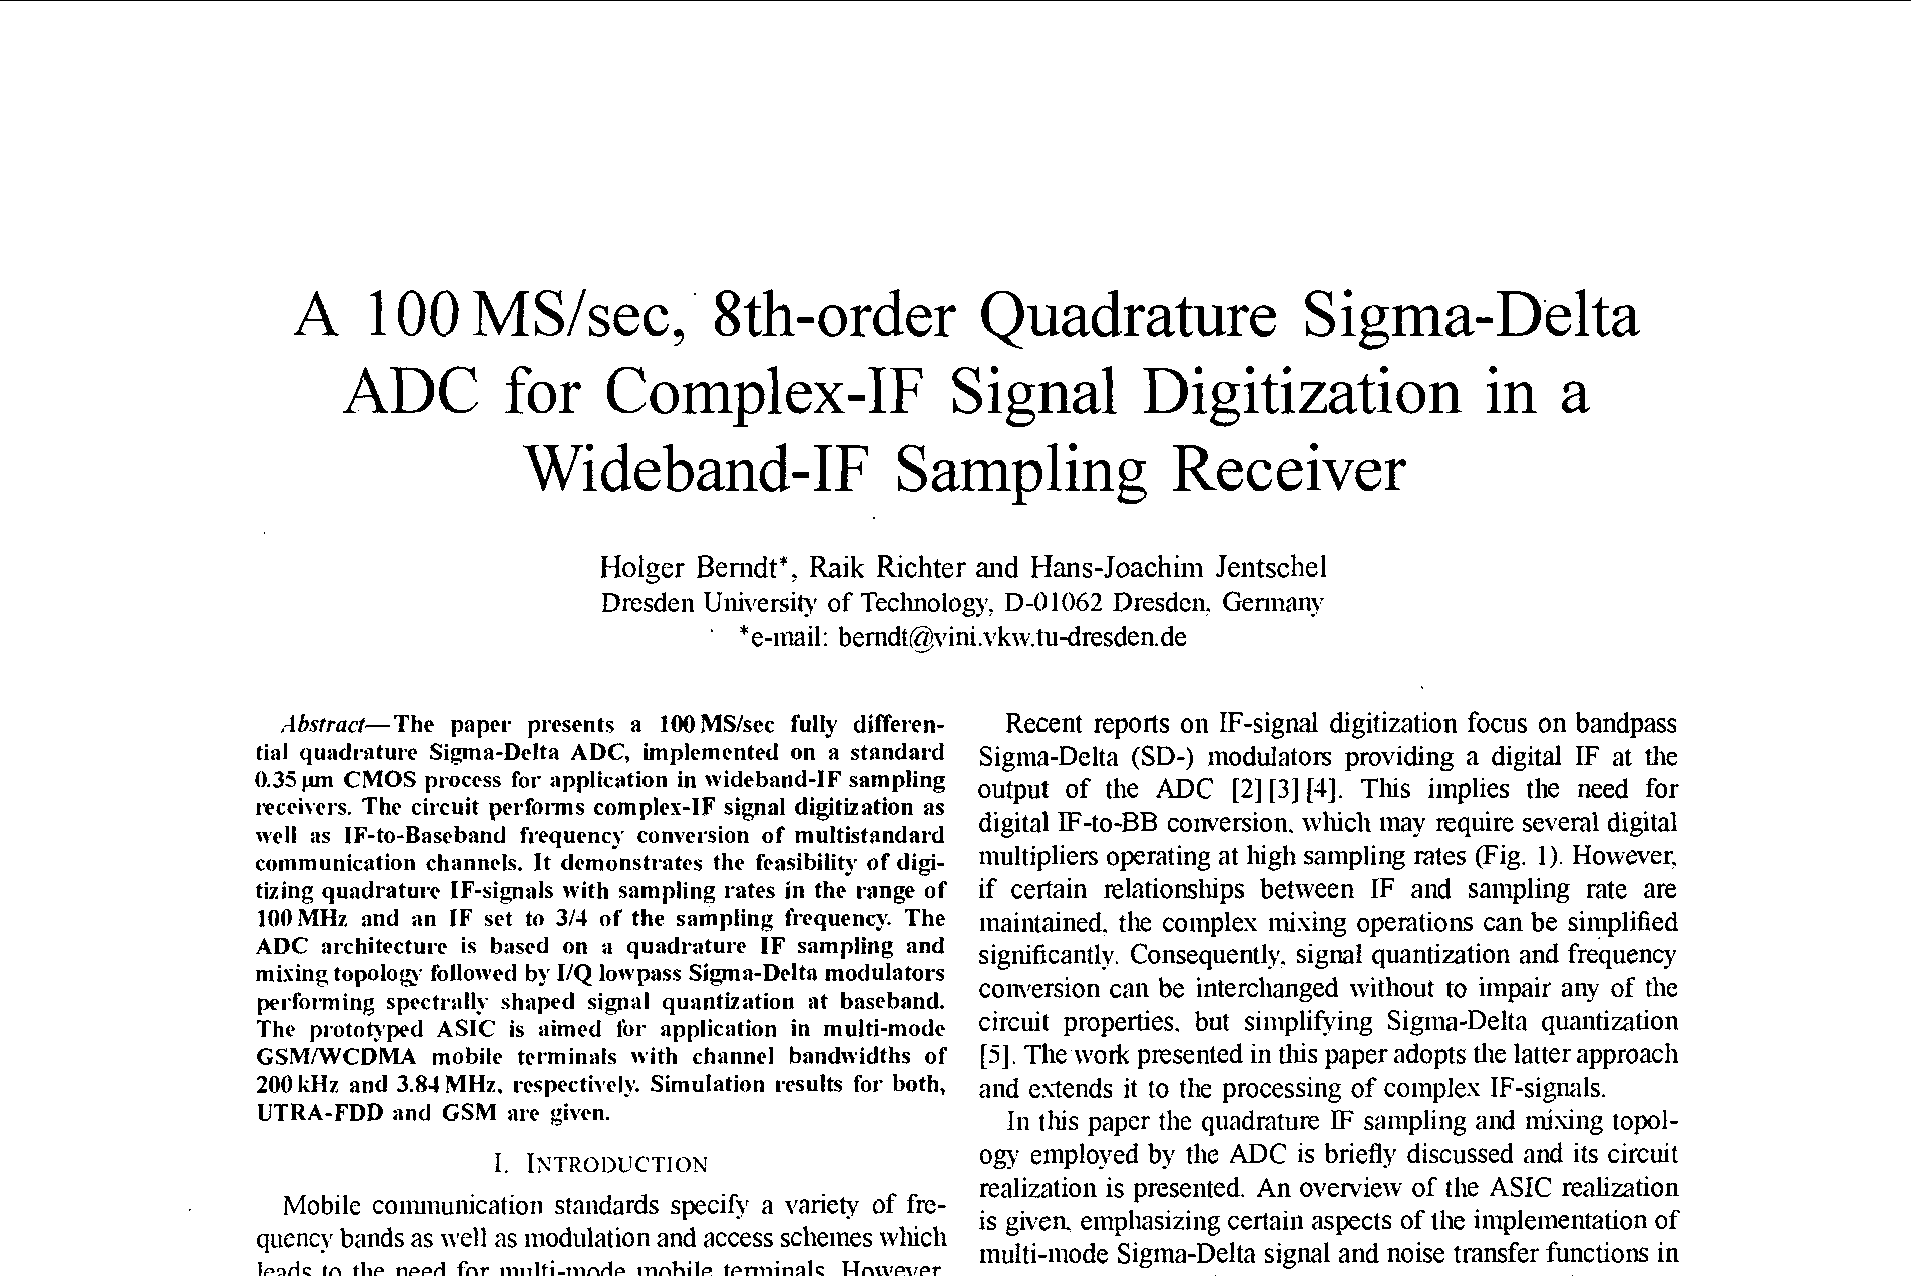 A 100 MSsec, 8th-order Quadrature Sigma-Delta ADC for Complex-IF Signal Digitization